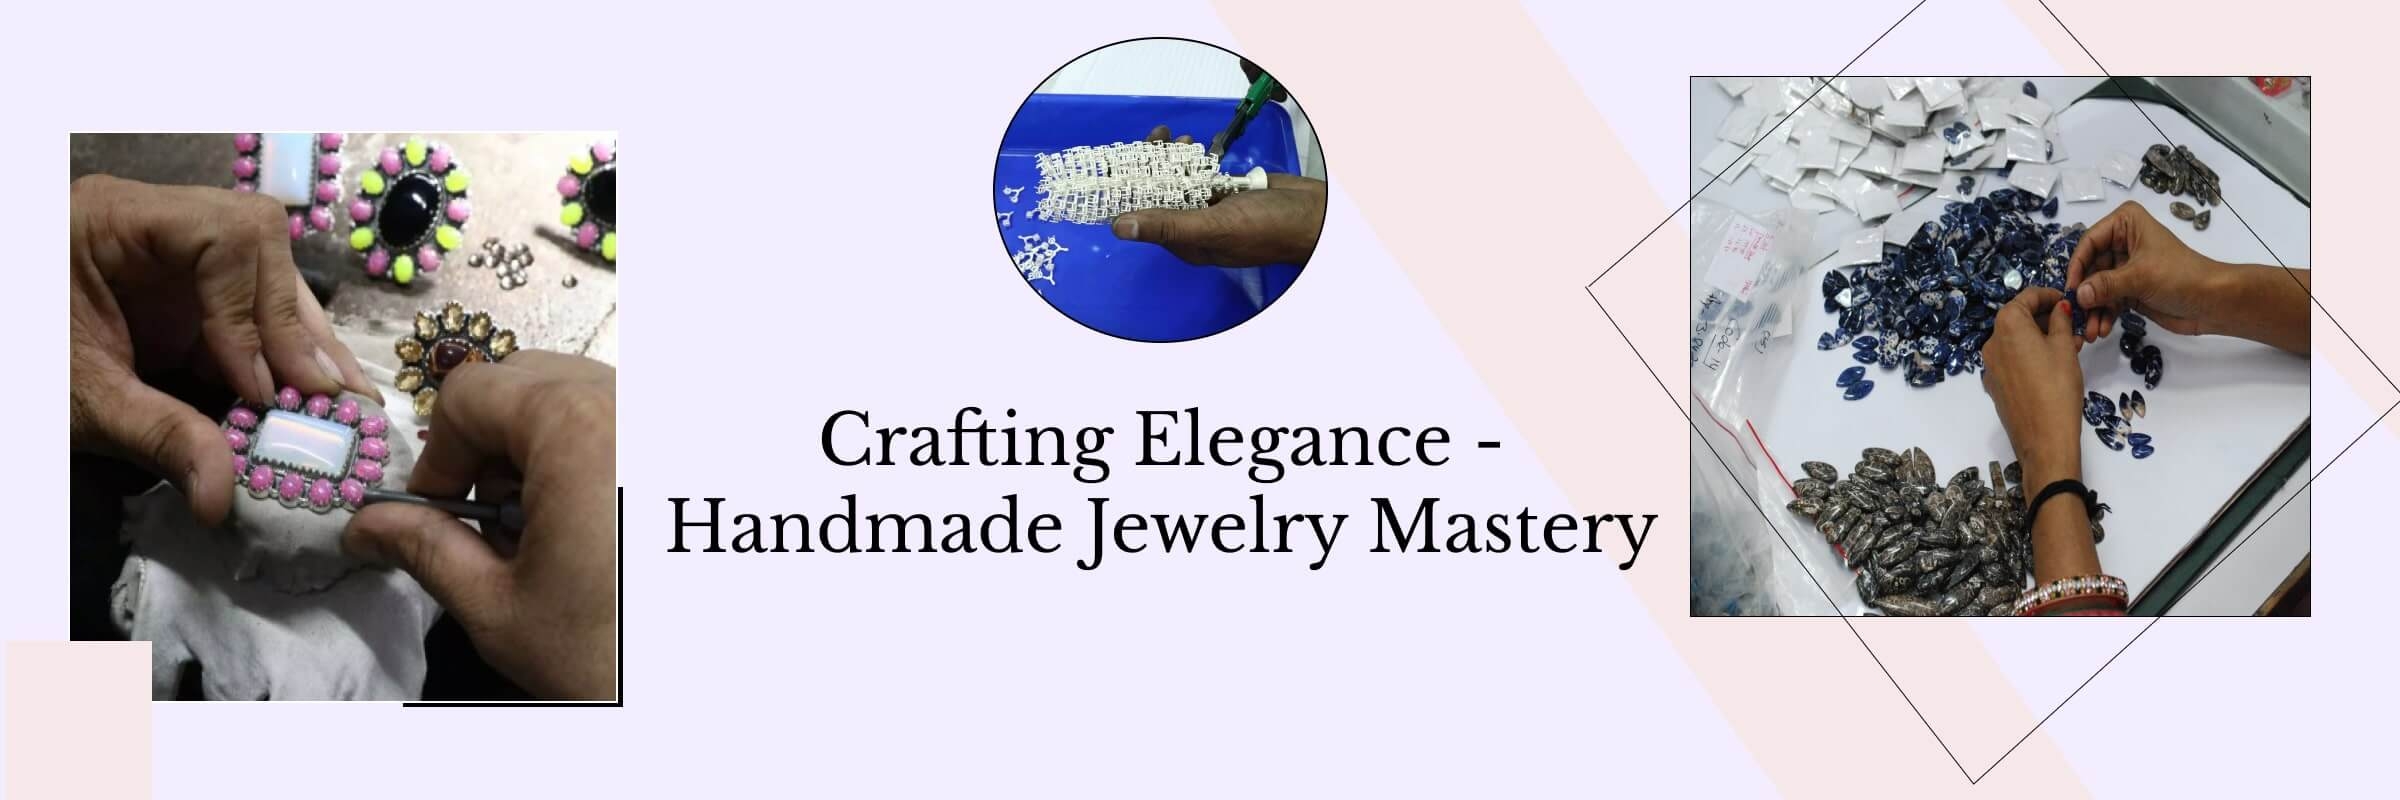 The Artistry of Handmade Jewelry